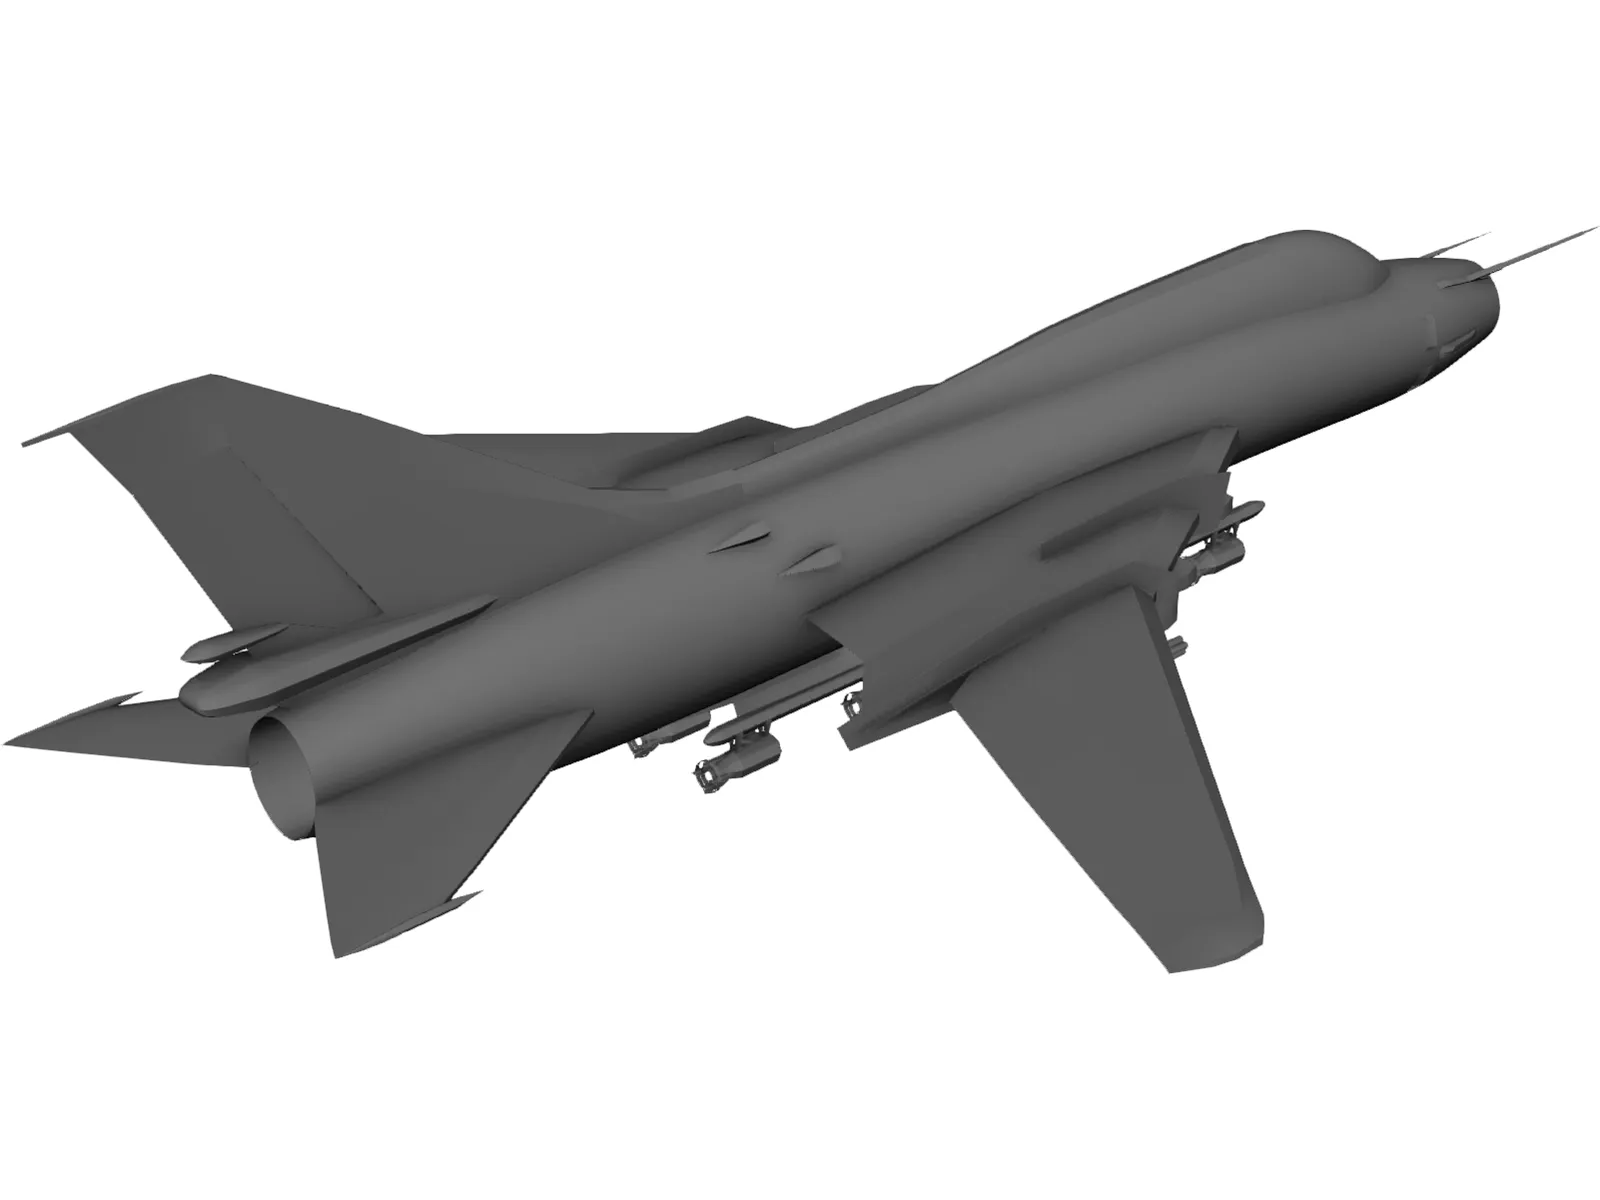 Sukhoi Su-17 Fitter 3D Model